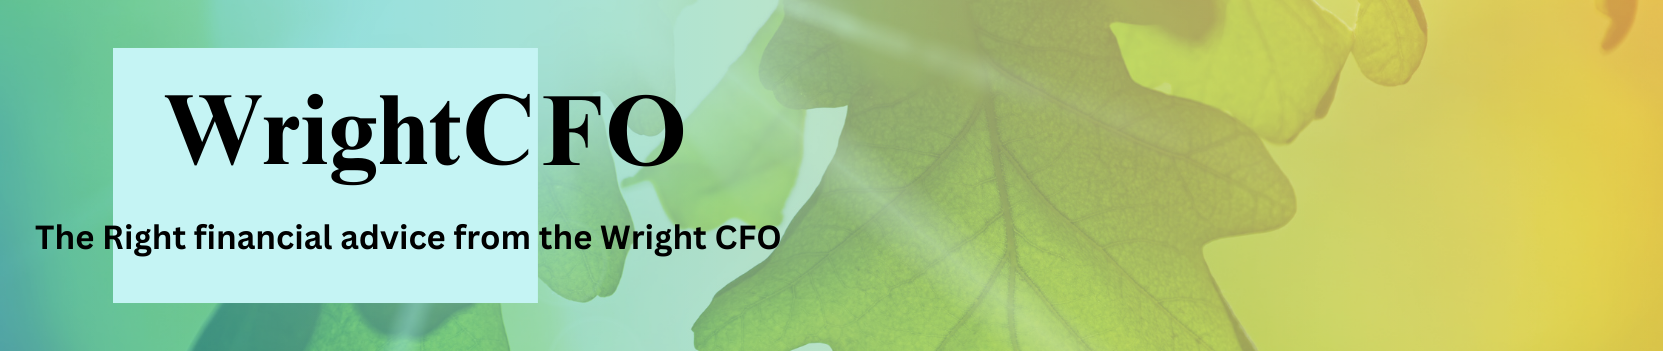 WrightCFO - Finance director support - Fractional CFO